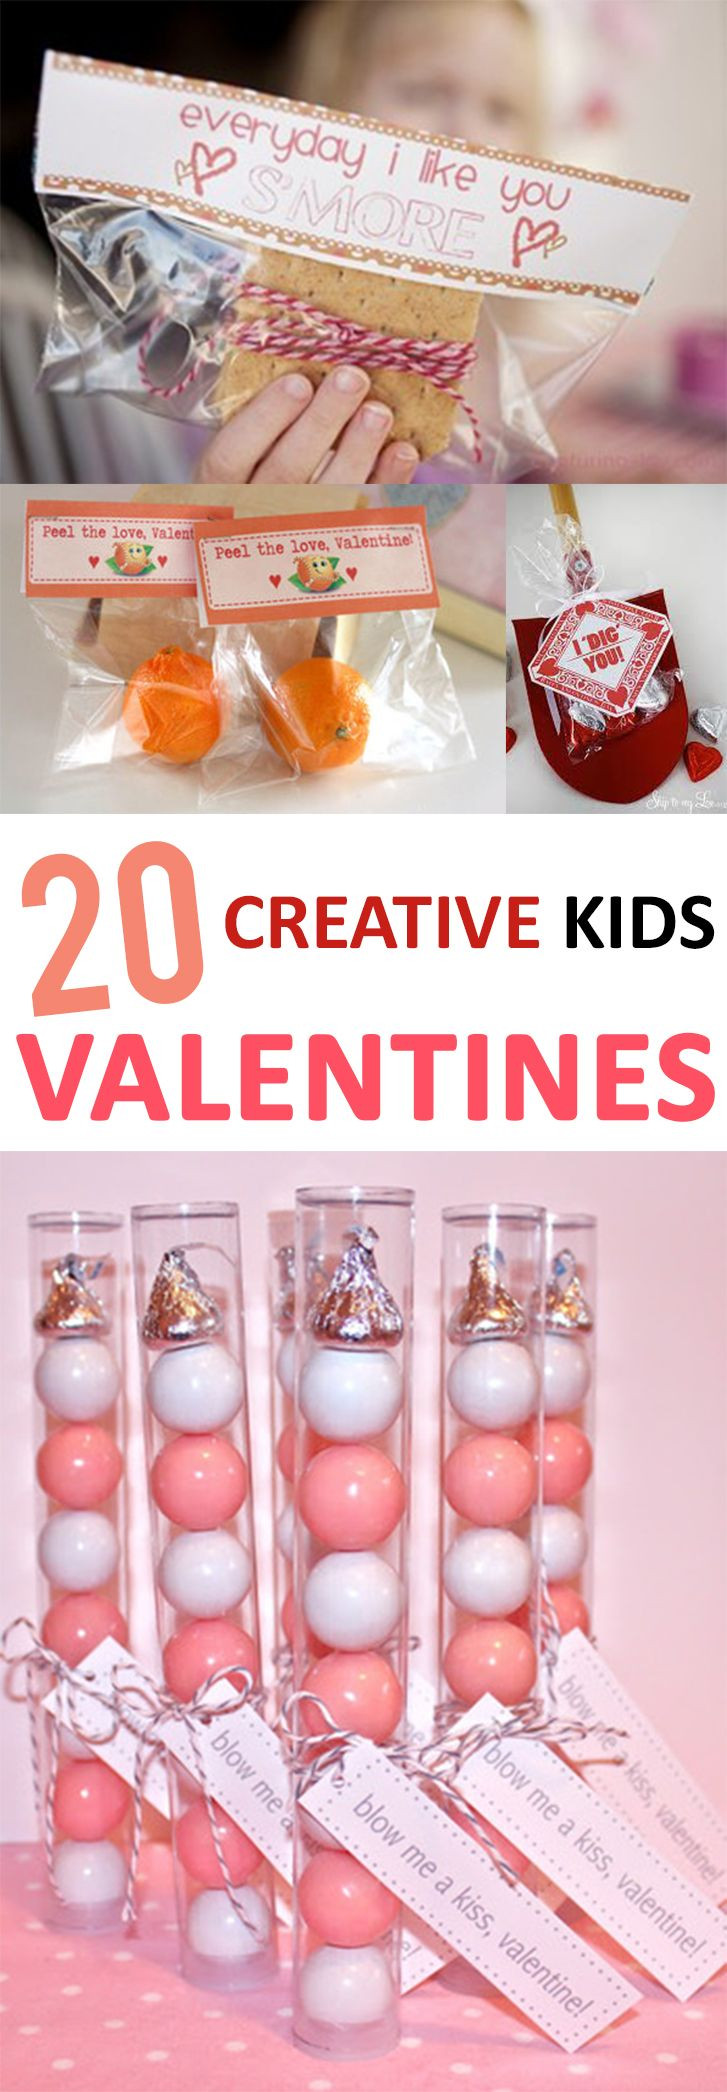 Unique Valentine'S Day Gift Ideas
 Best 25 Unique valentines day ideas ideas on Pinterest